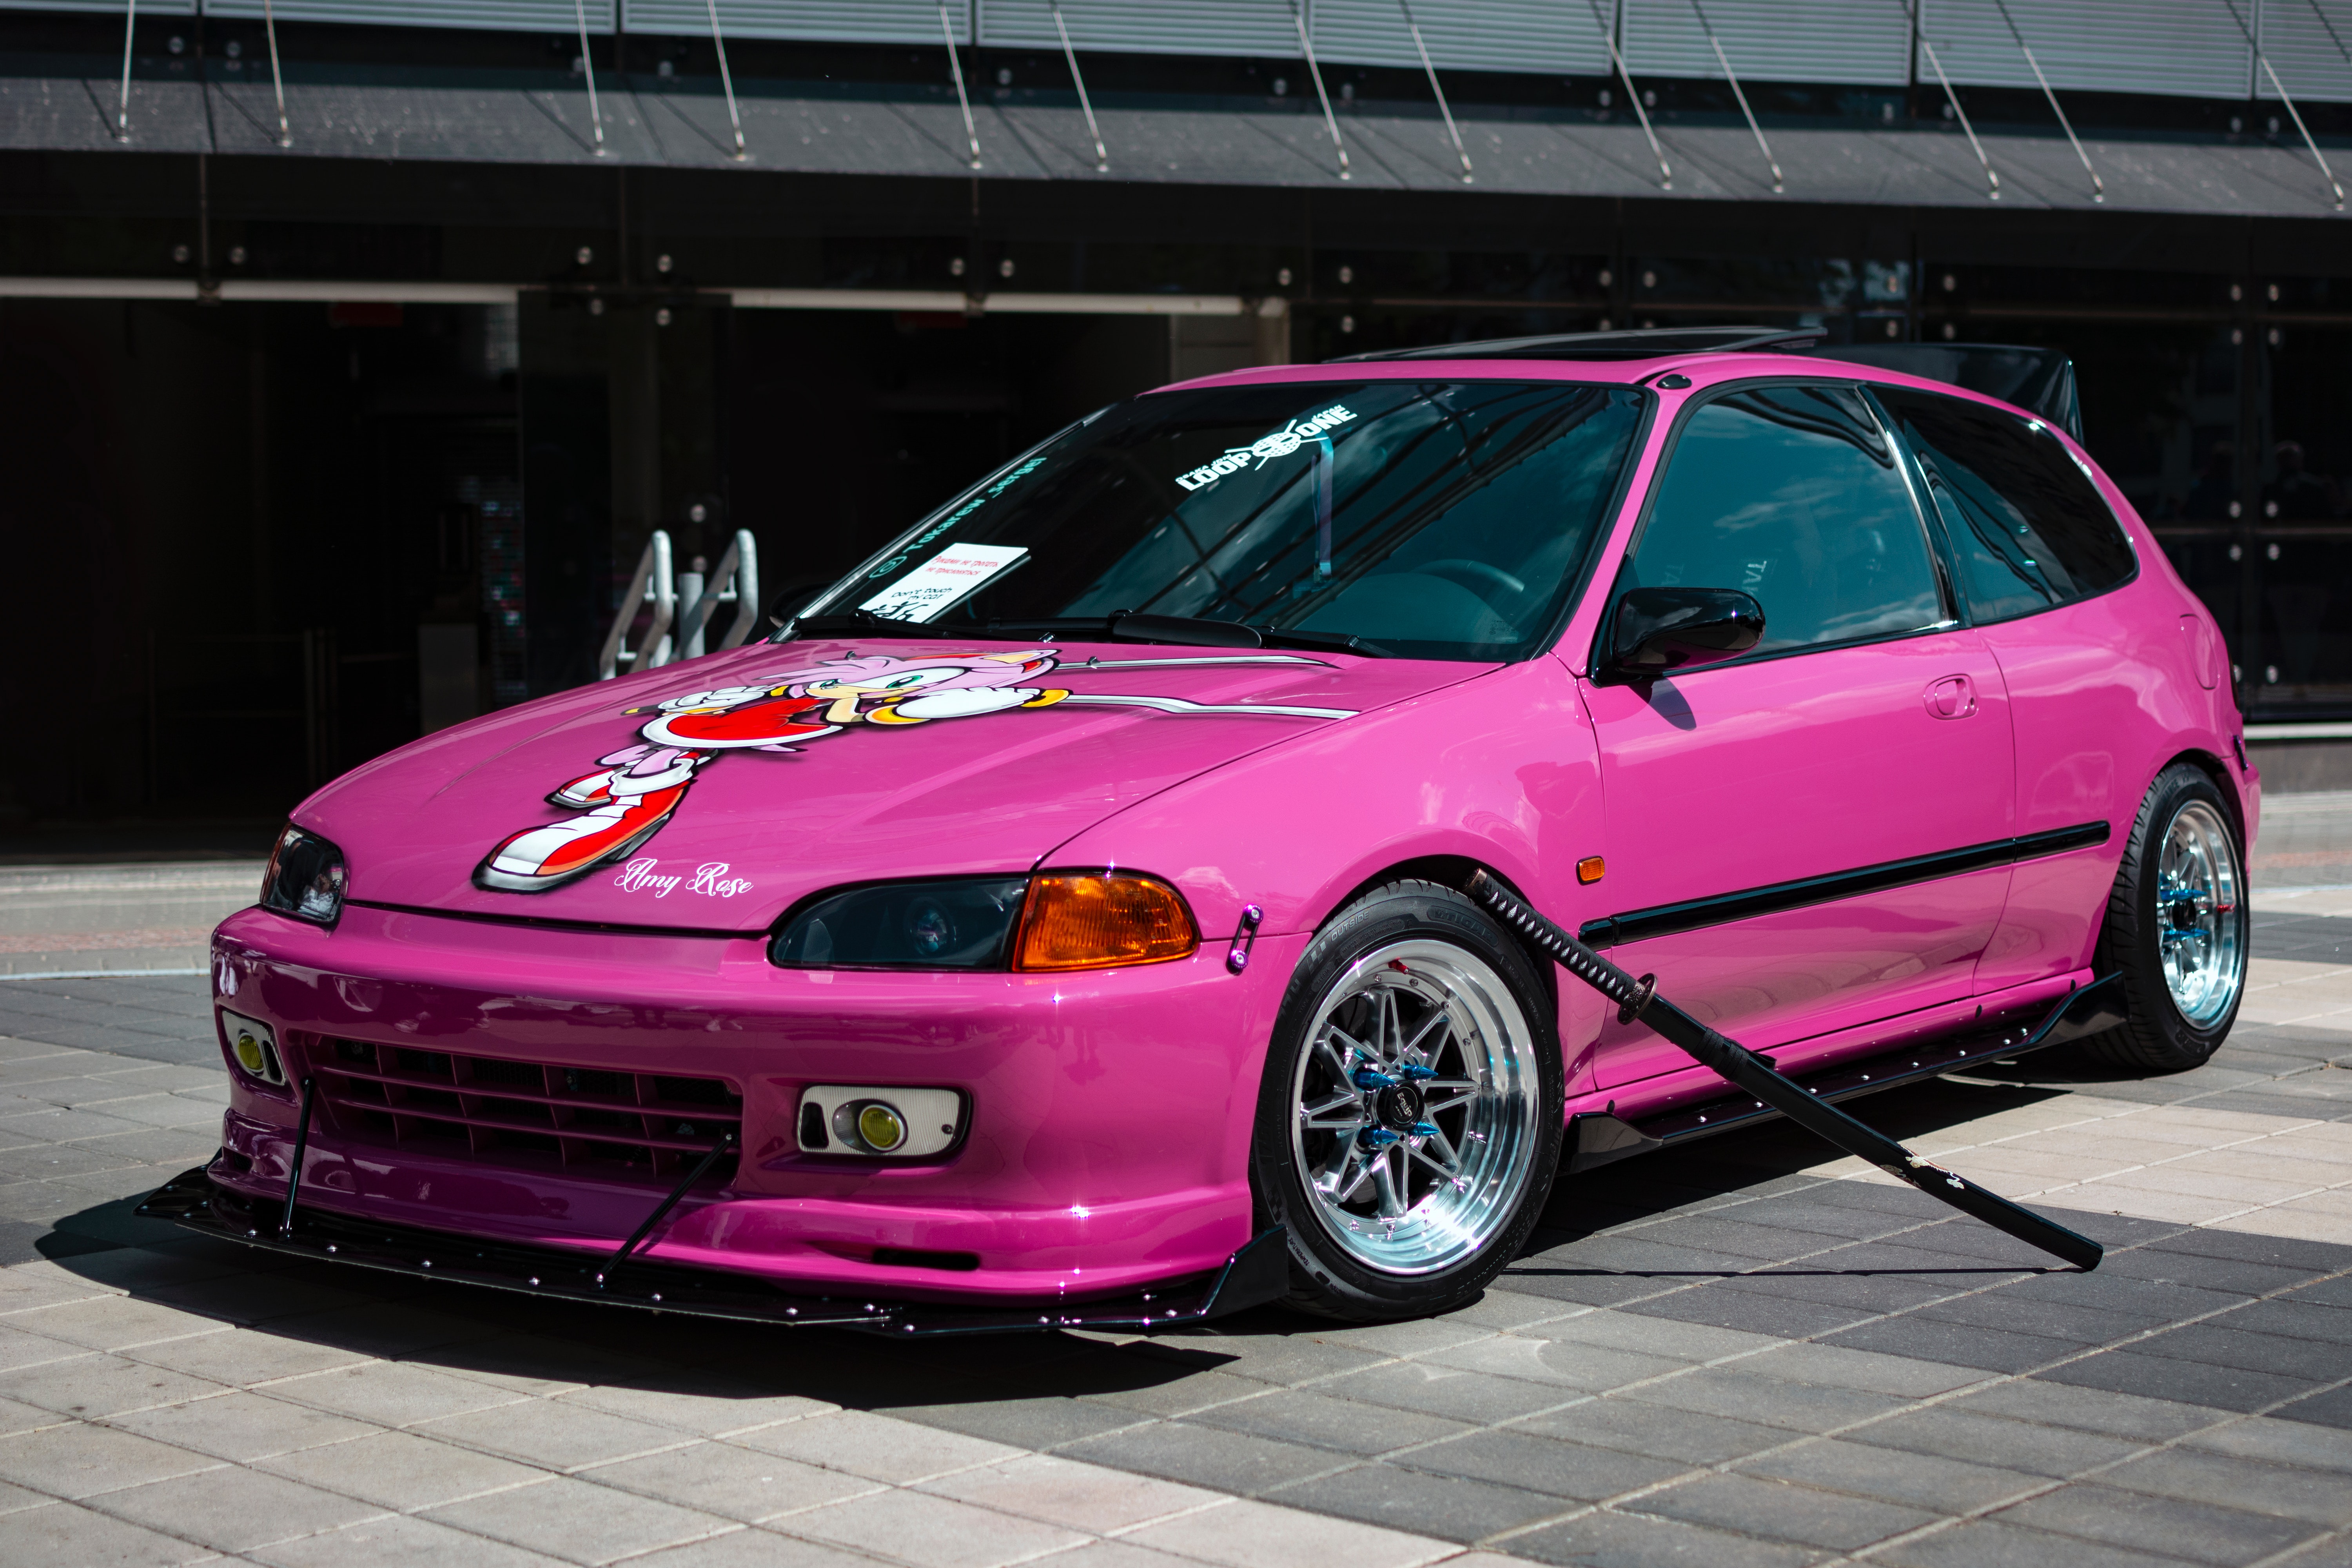 General 6000x4000 car Sonic the Hedgehog pink cars vehicle frontal view katana Amy Rose weapon Honda sword Japanese cars